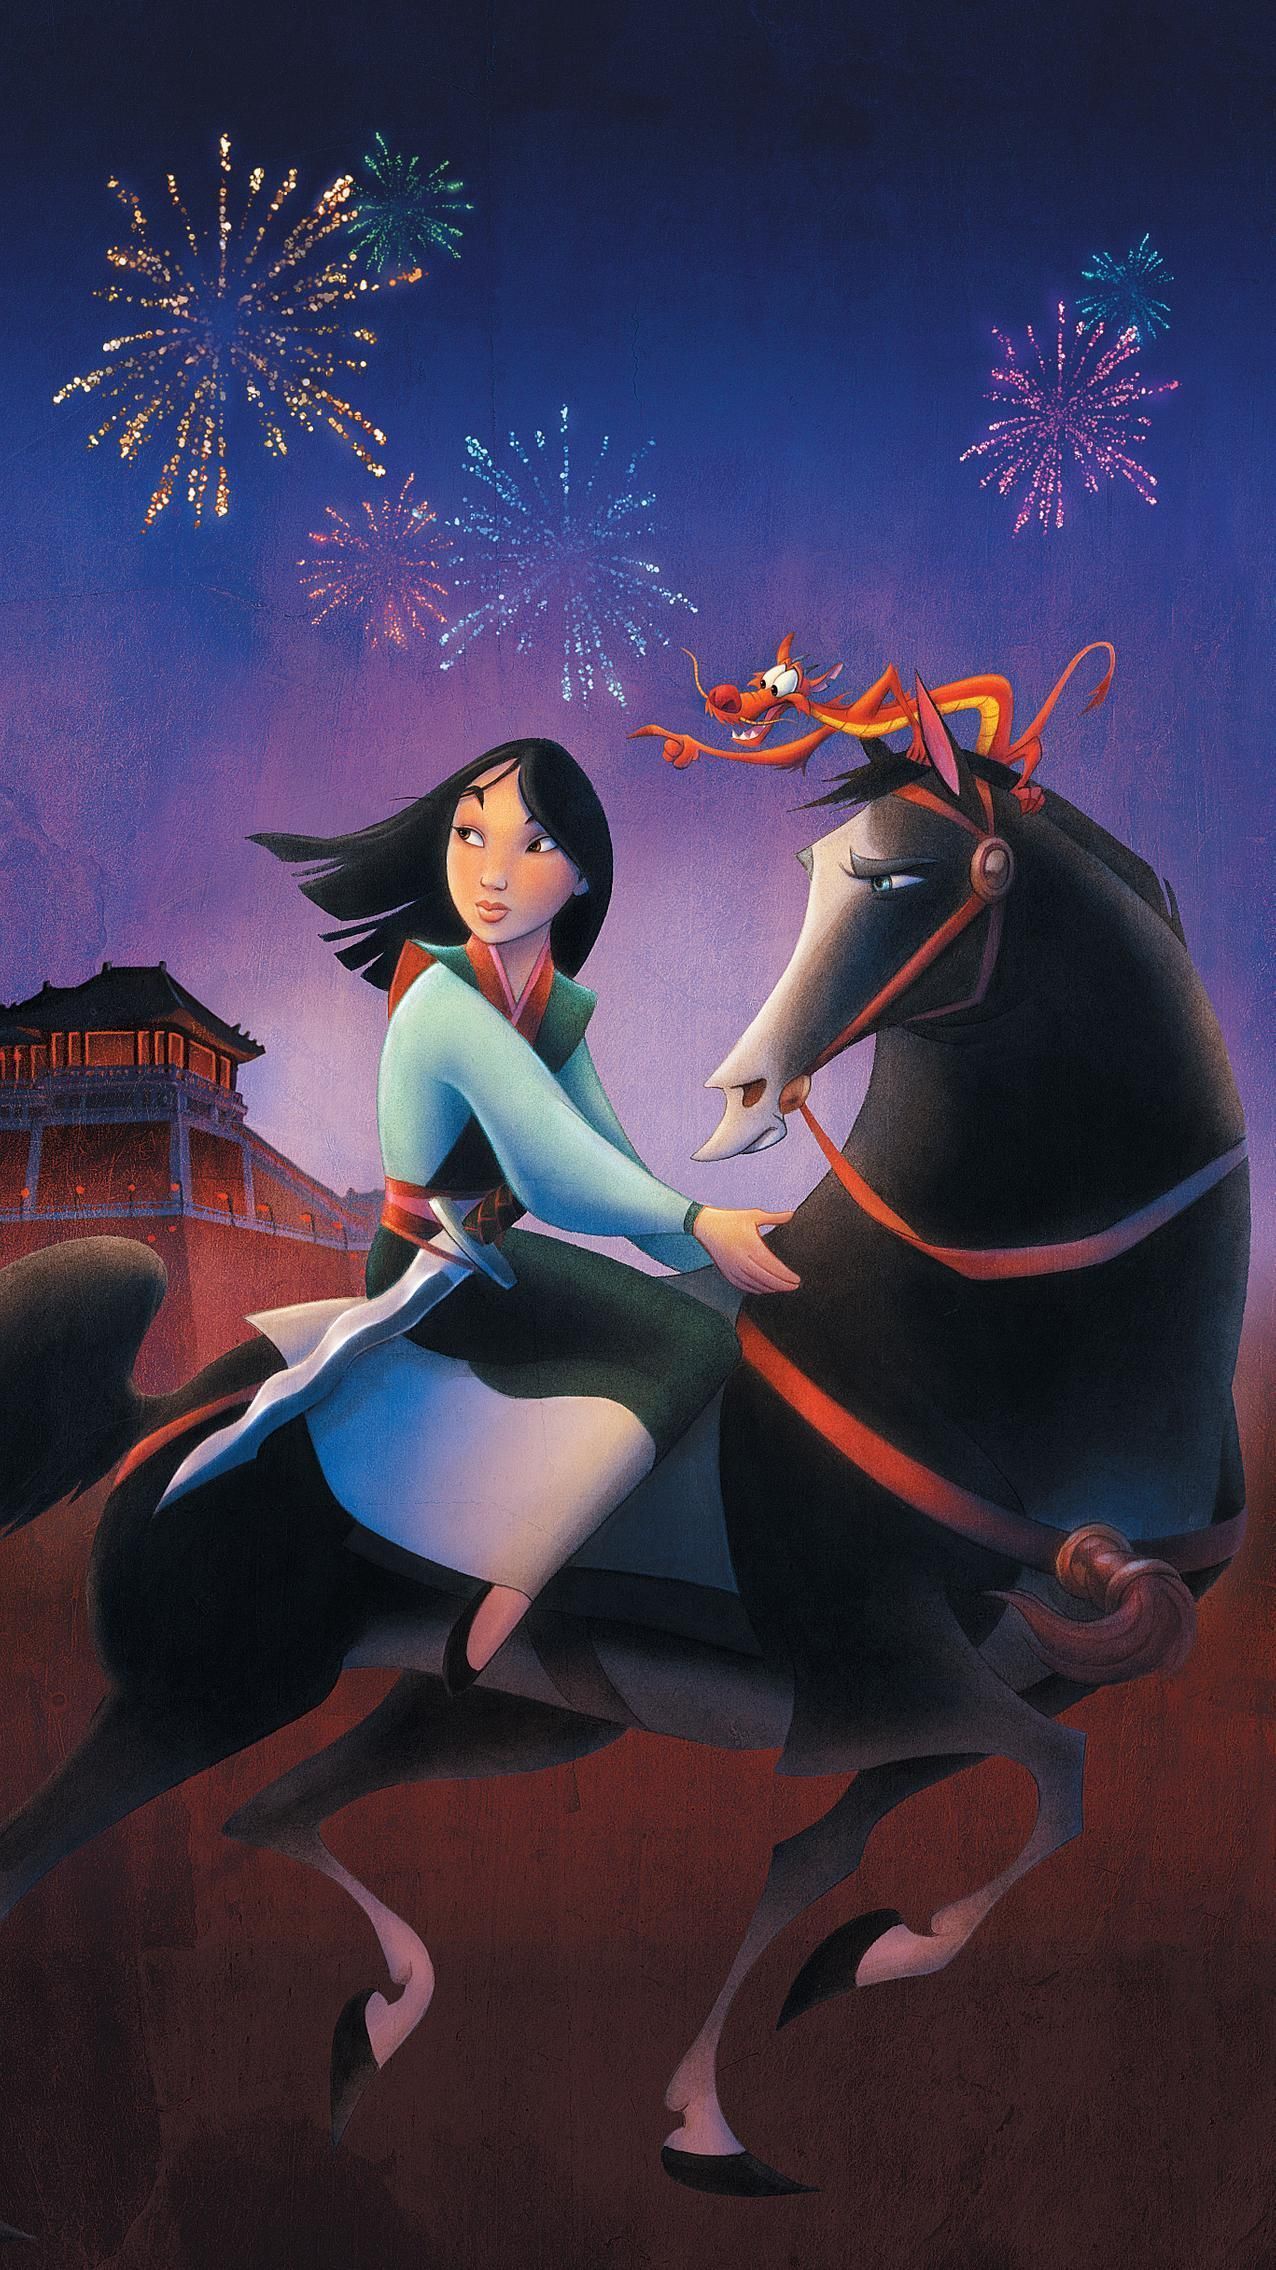 Mulan rides her horse in front of fireworks - Mulan